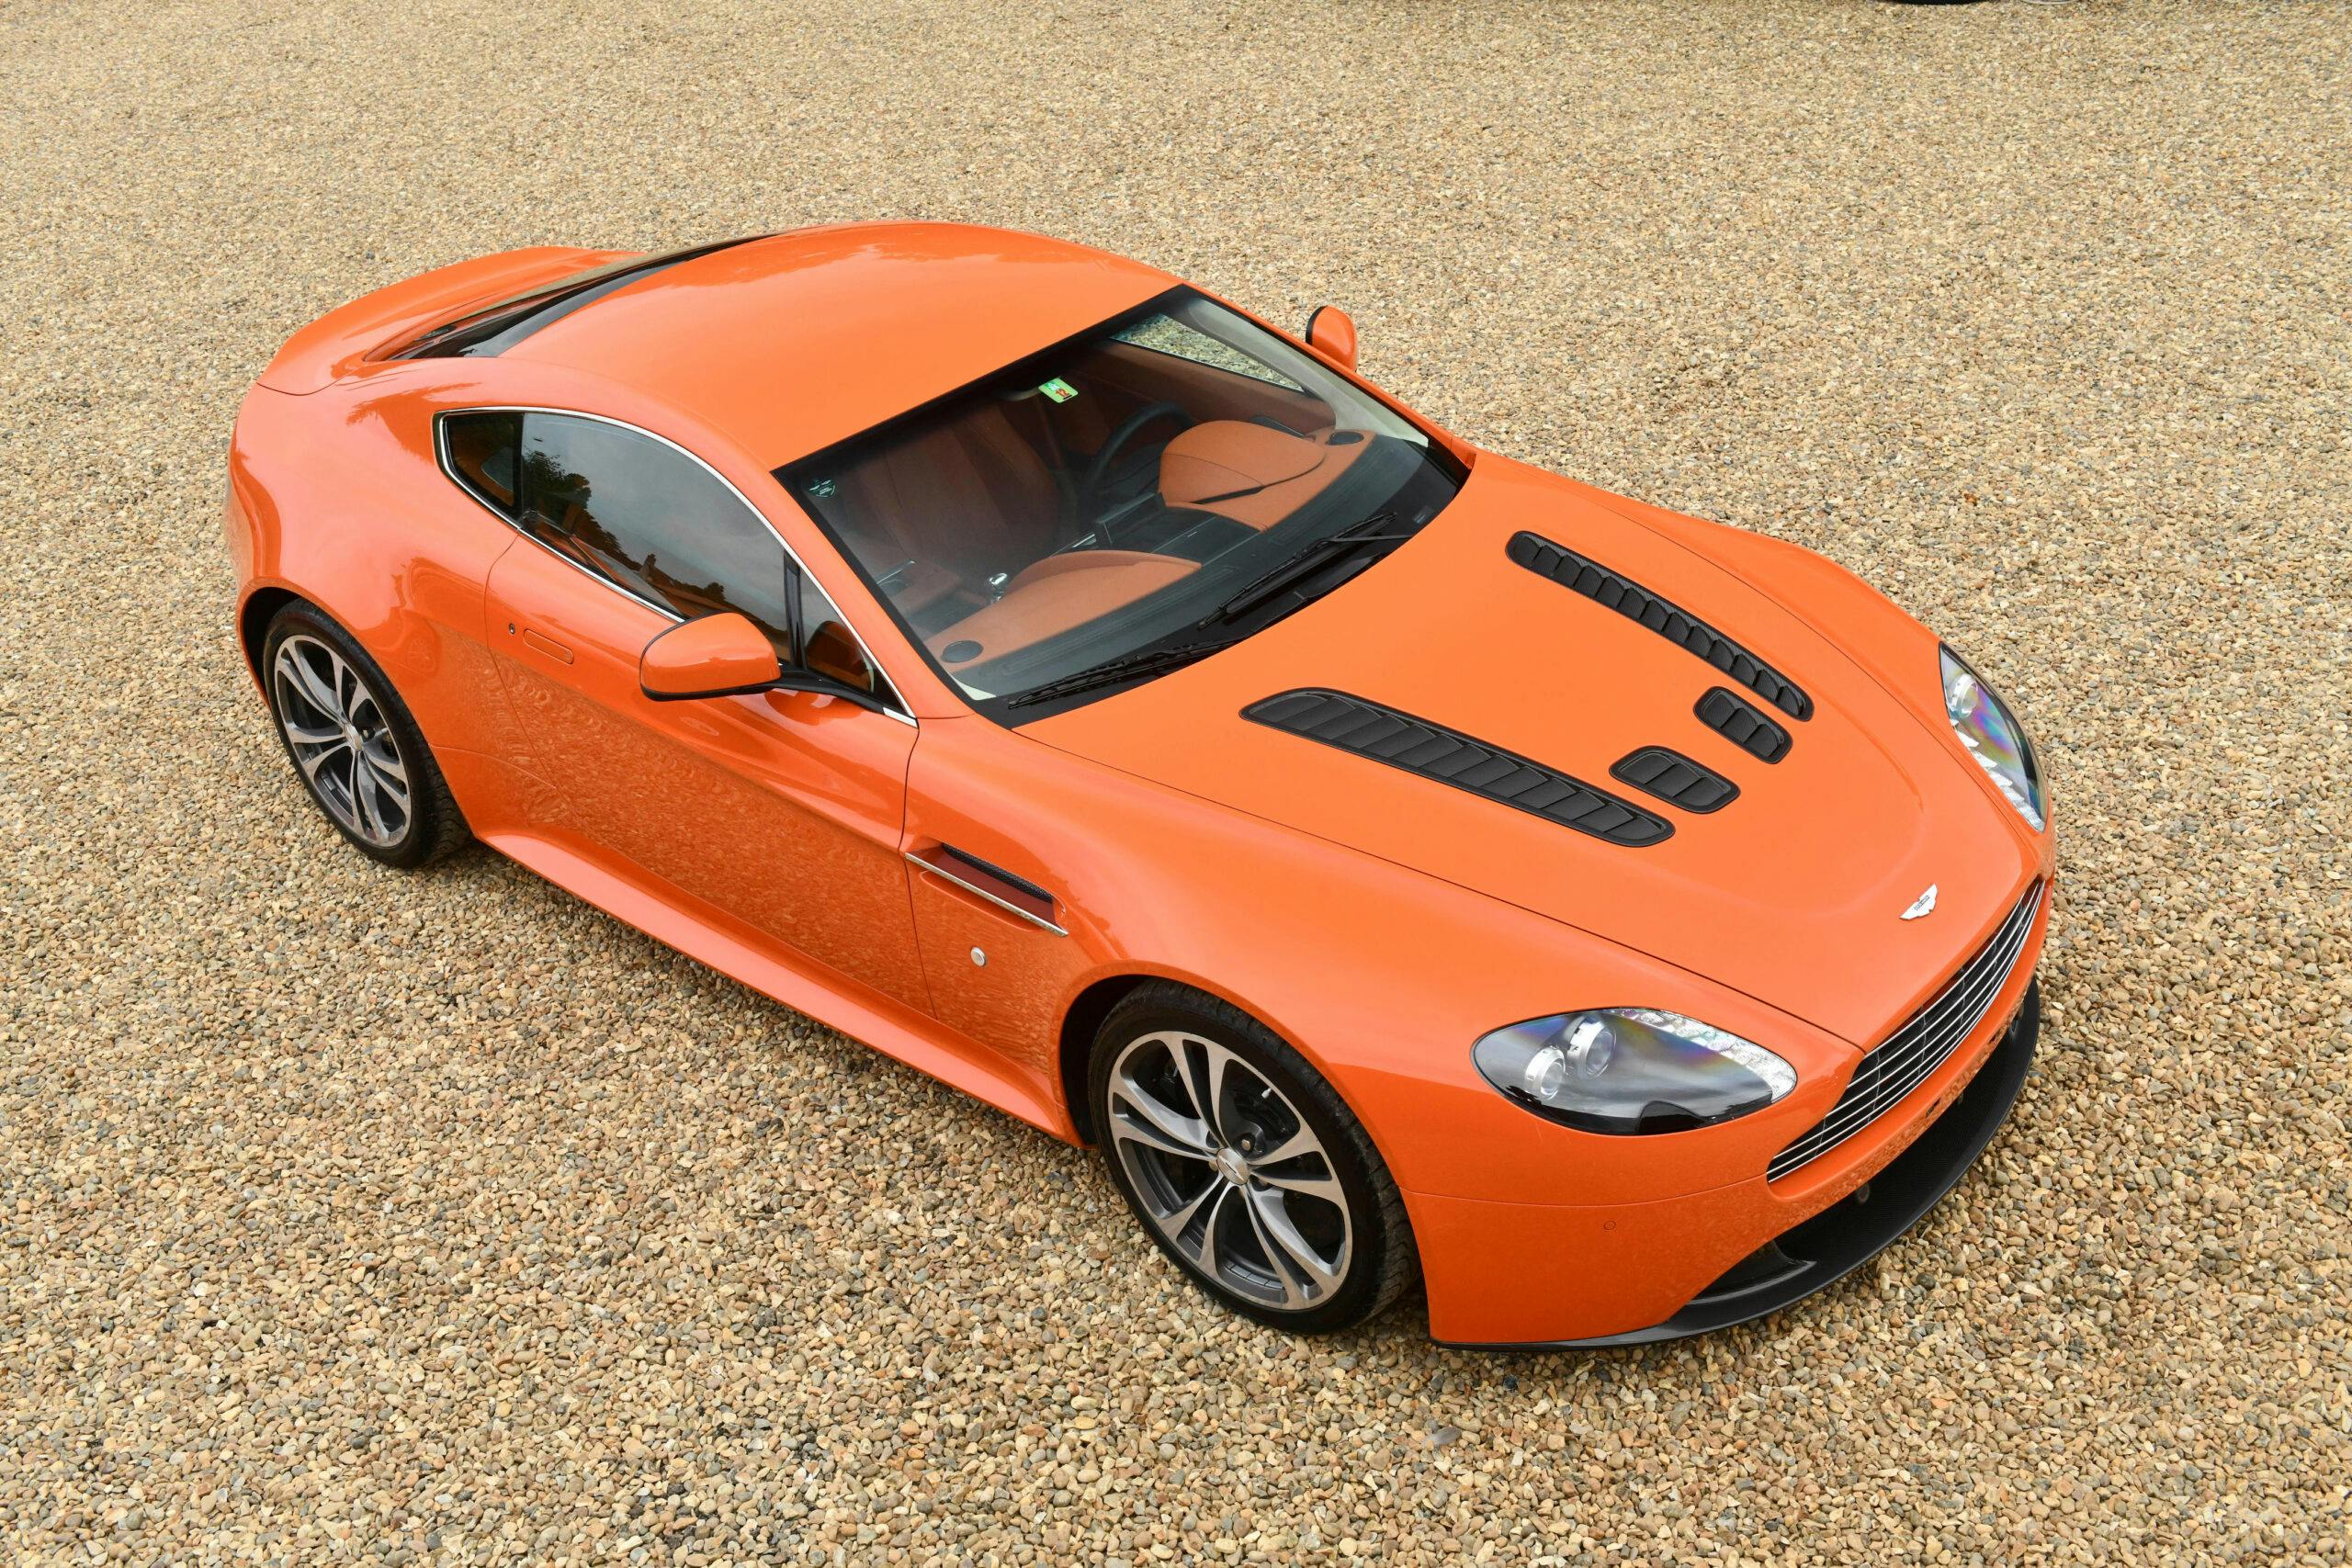 2010-Aston-Martin-V12-Vantage orange front three quarter high angle